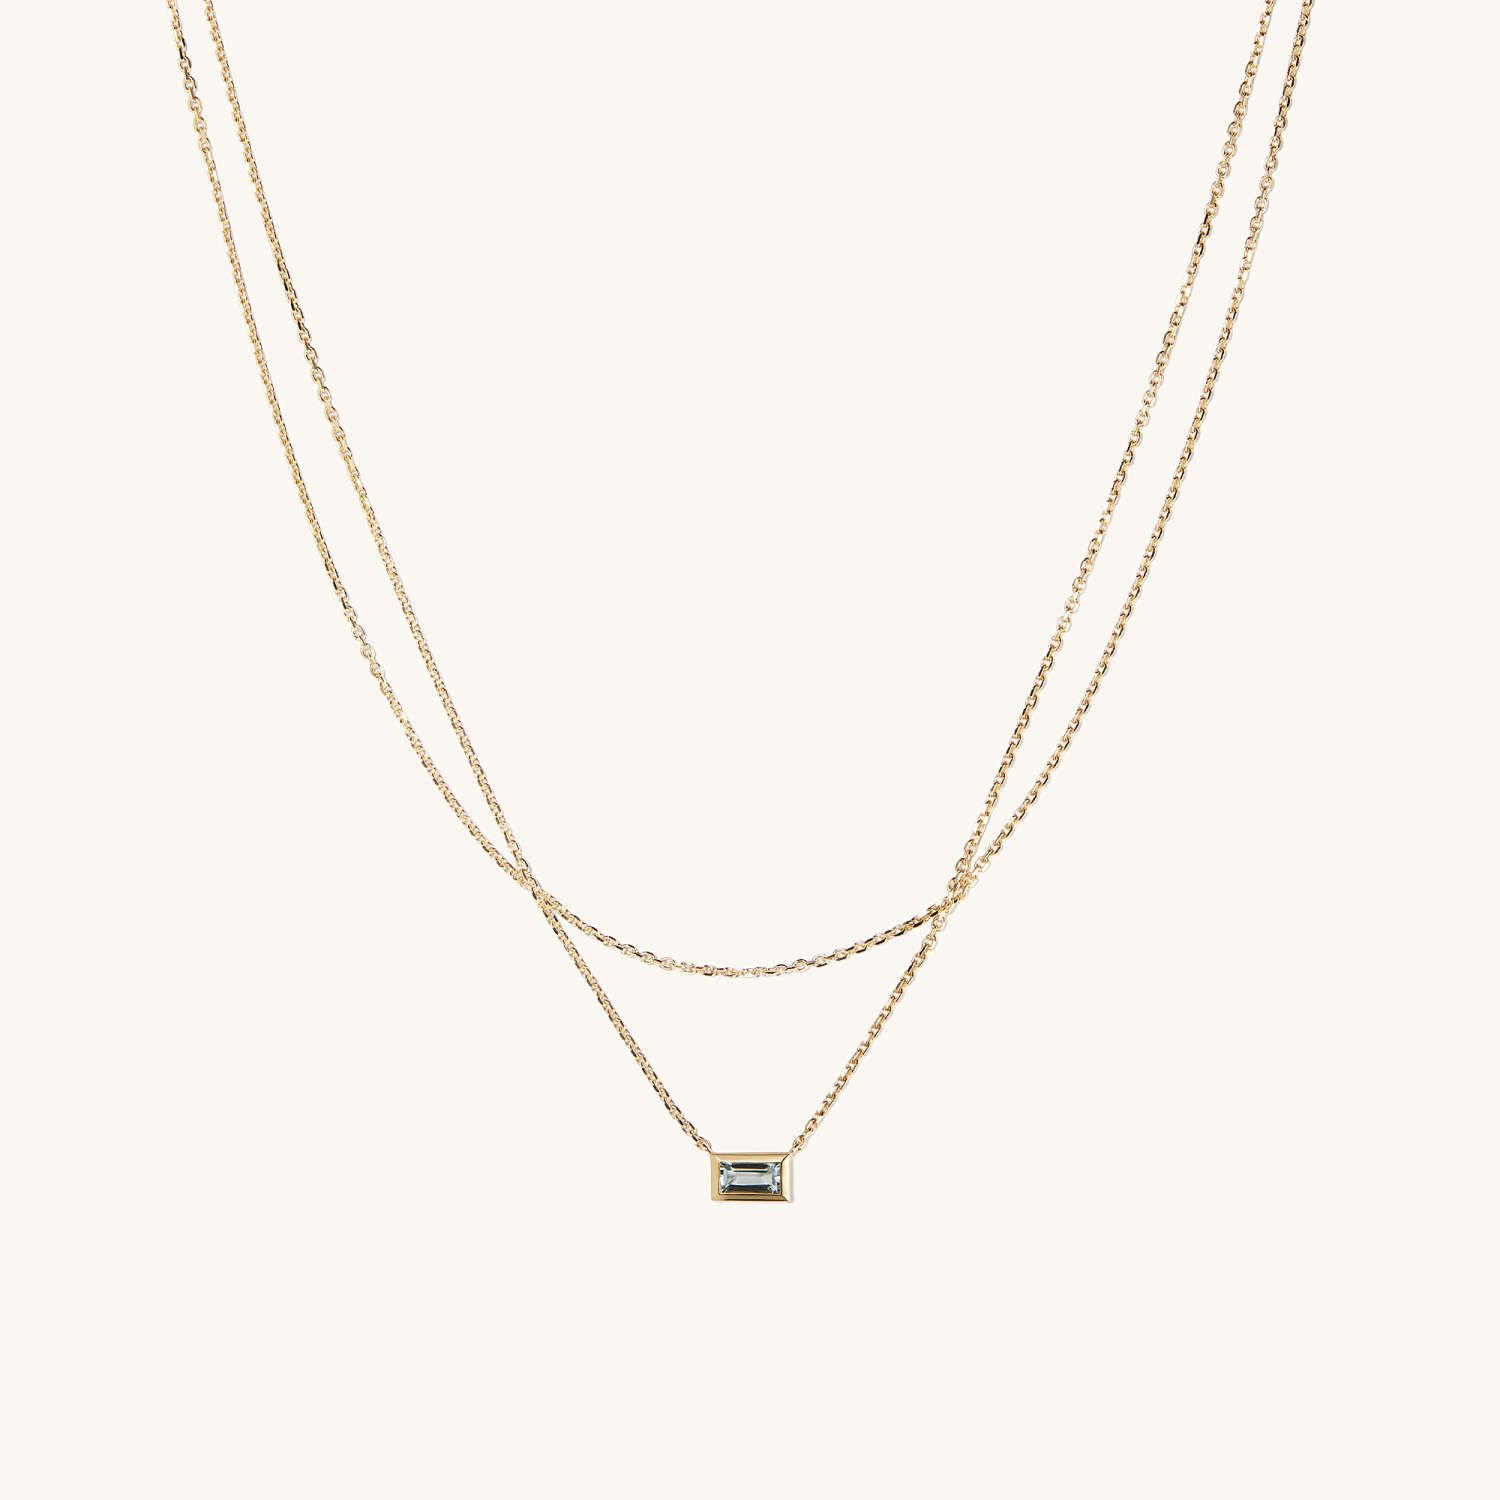 Layered Aquamarine Necklace - $148 | Mejuri (Global)